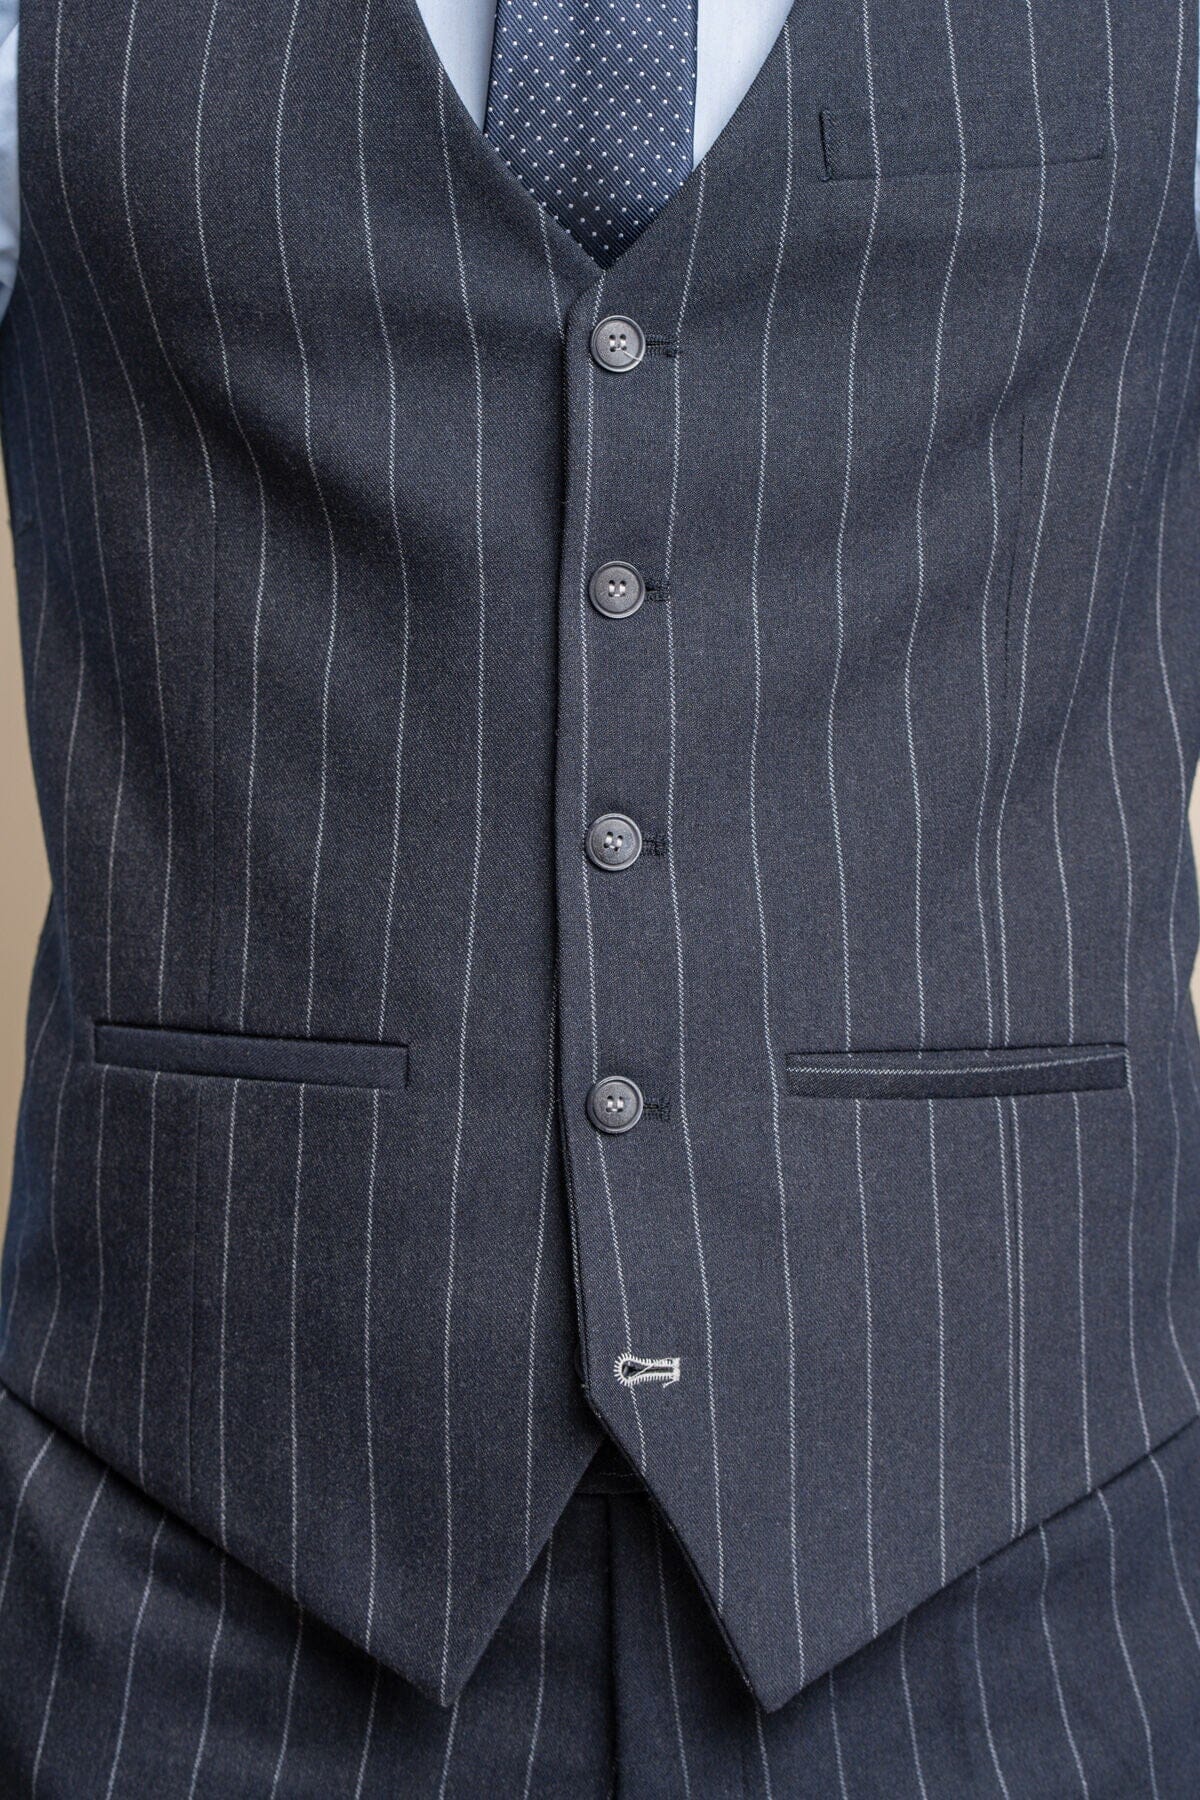 Invincible Navy Pinstripe 3 Piece Wedding Suit - Suits - 